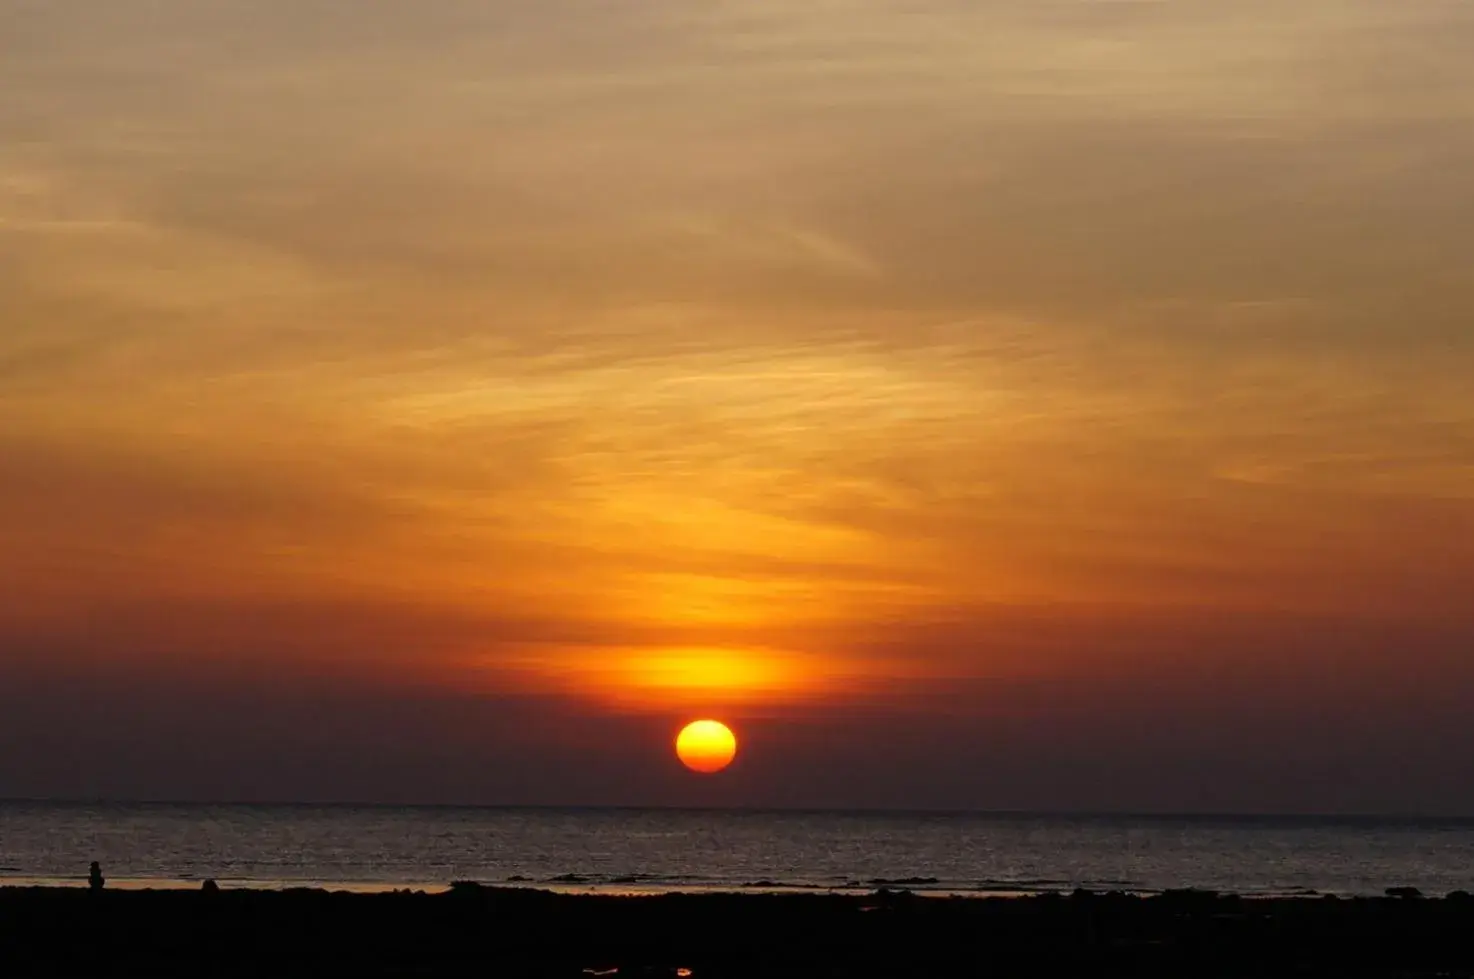 Off site, Sunrise/Sunset in Veranda Lanta Resort